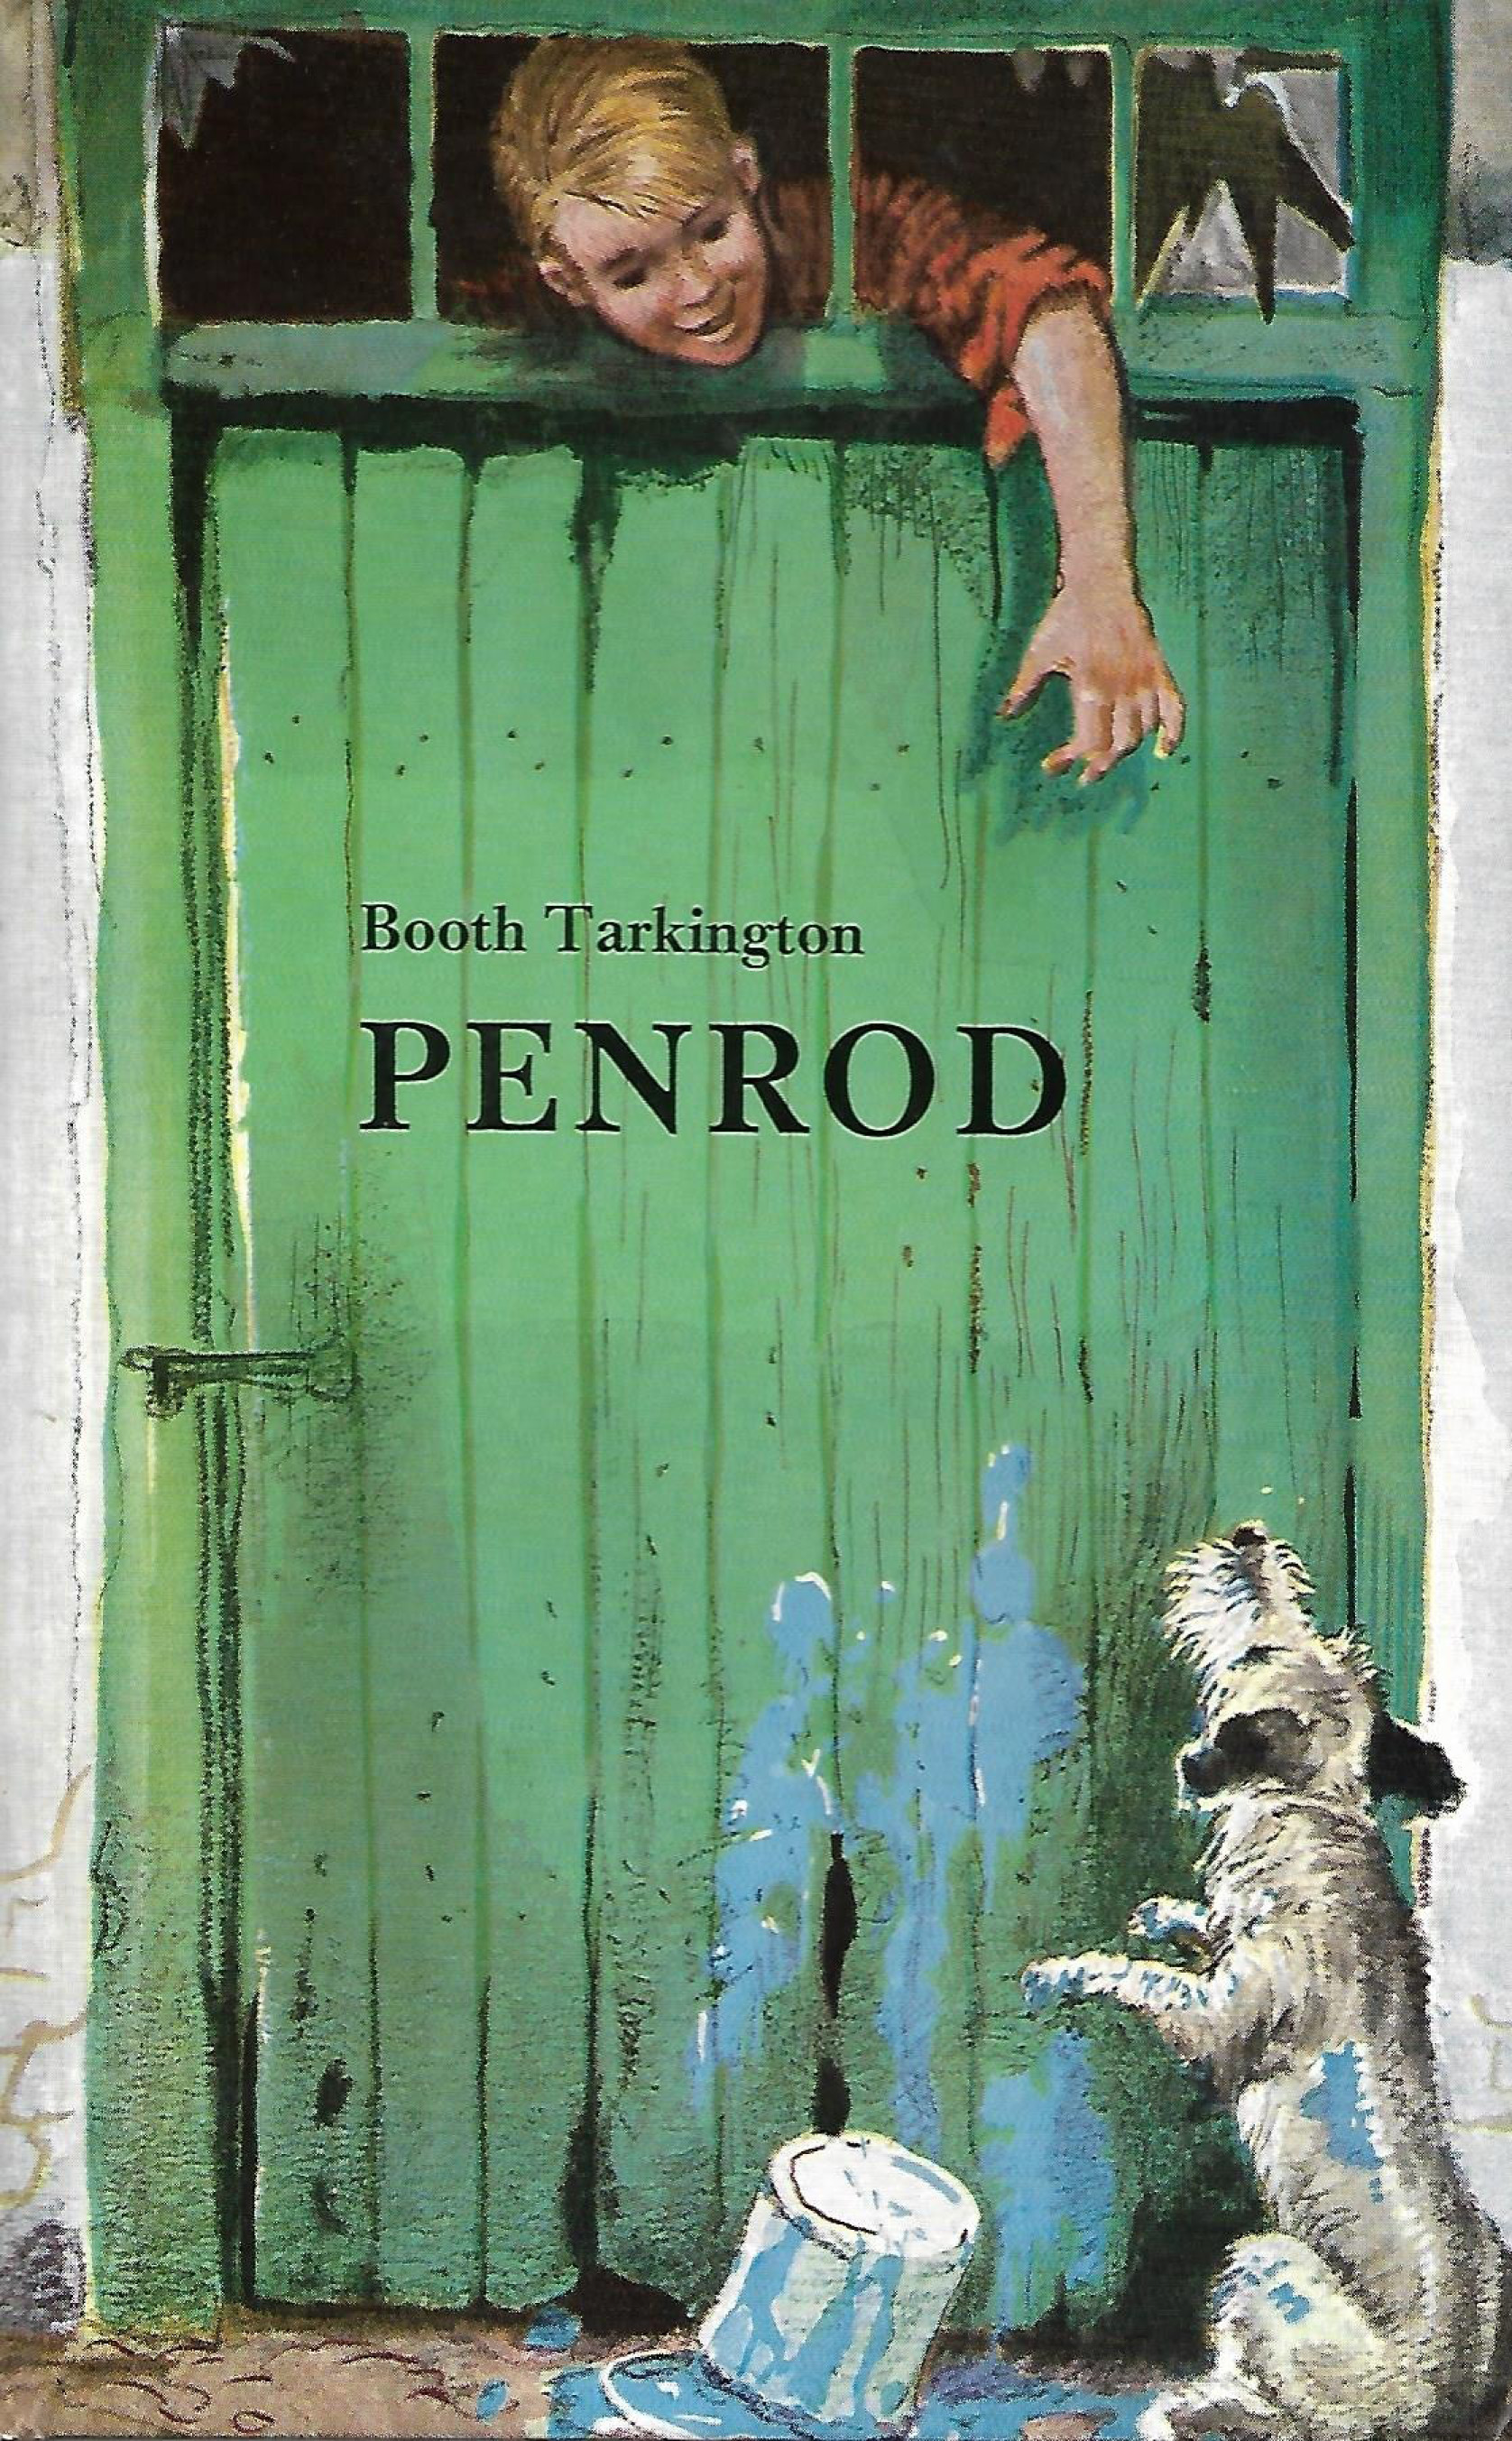 Penrod - Booth Tarkington 1967-1